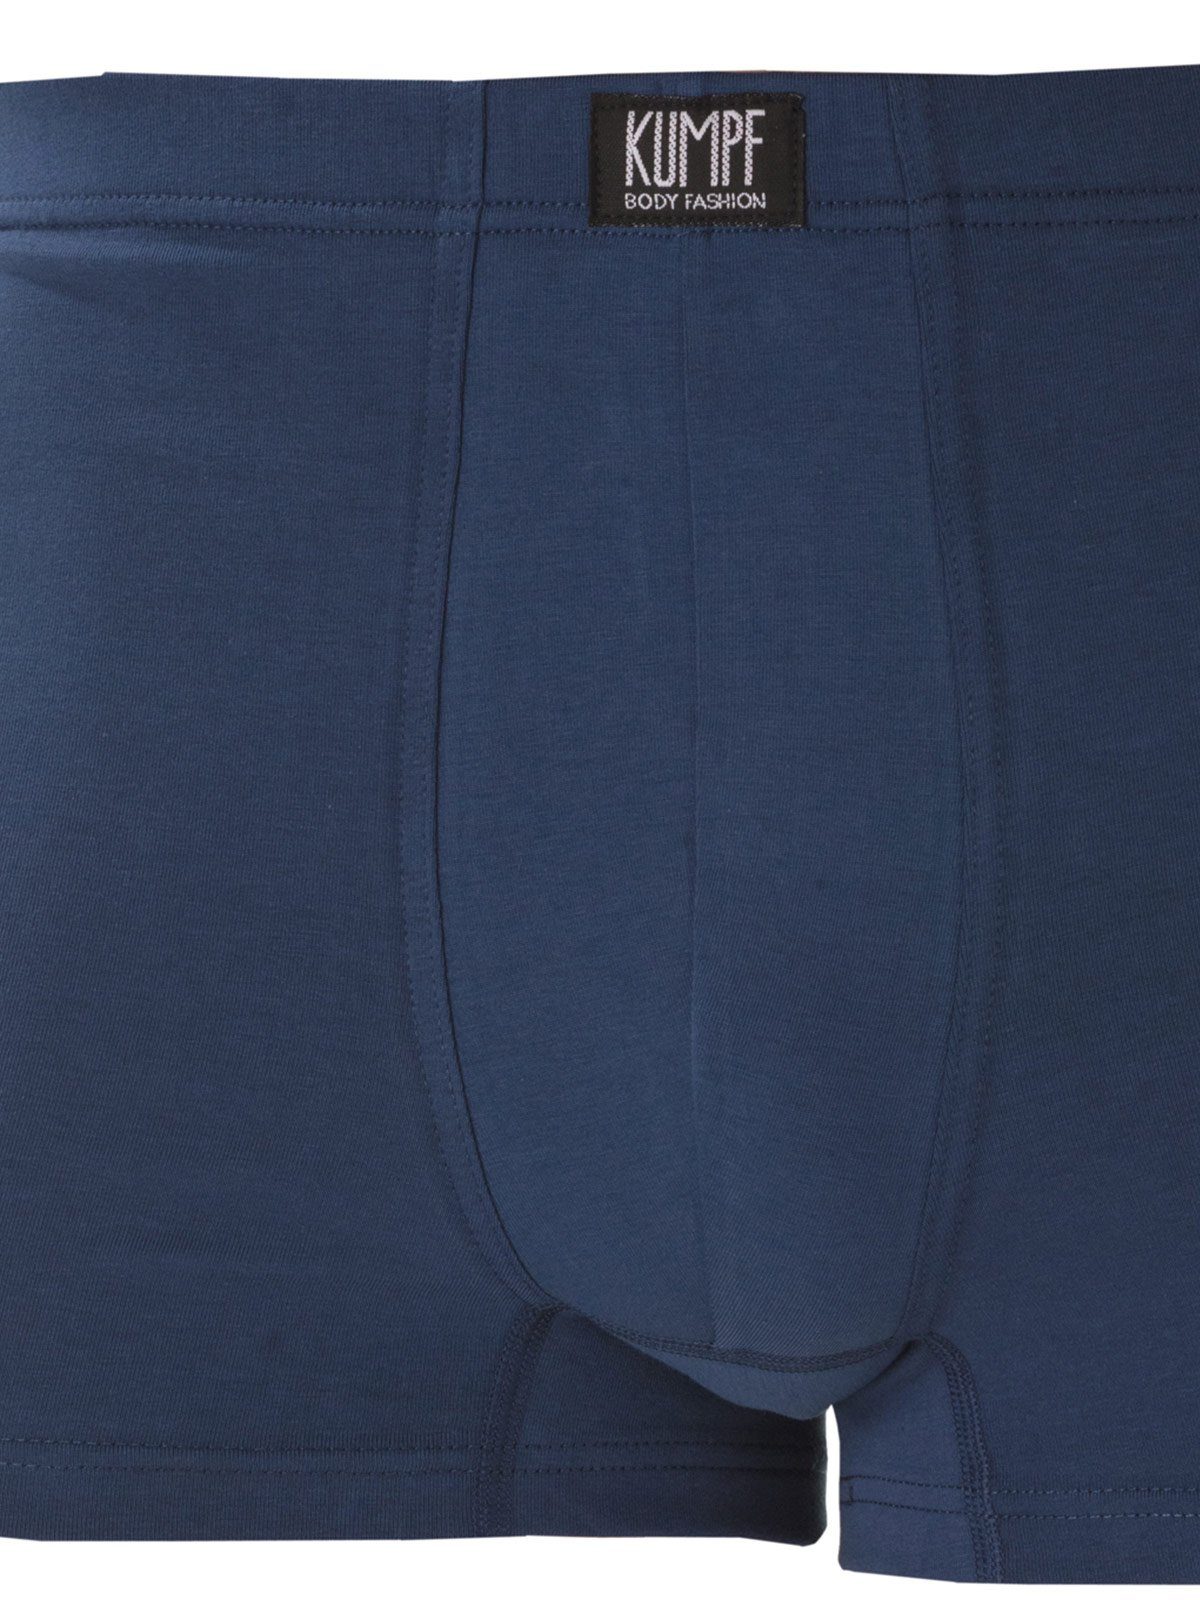 KUMPF Retro Pants Herren Cotton Bio (Stück, Markenqualität hohe darkblue Pants 1-St)